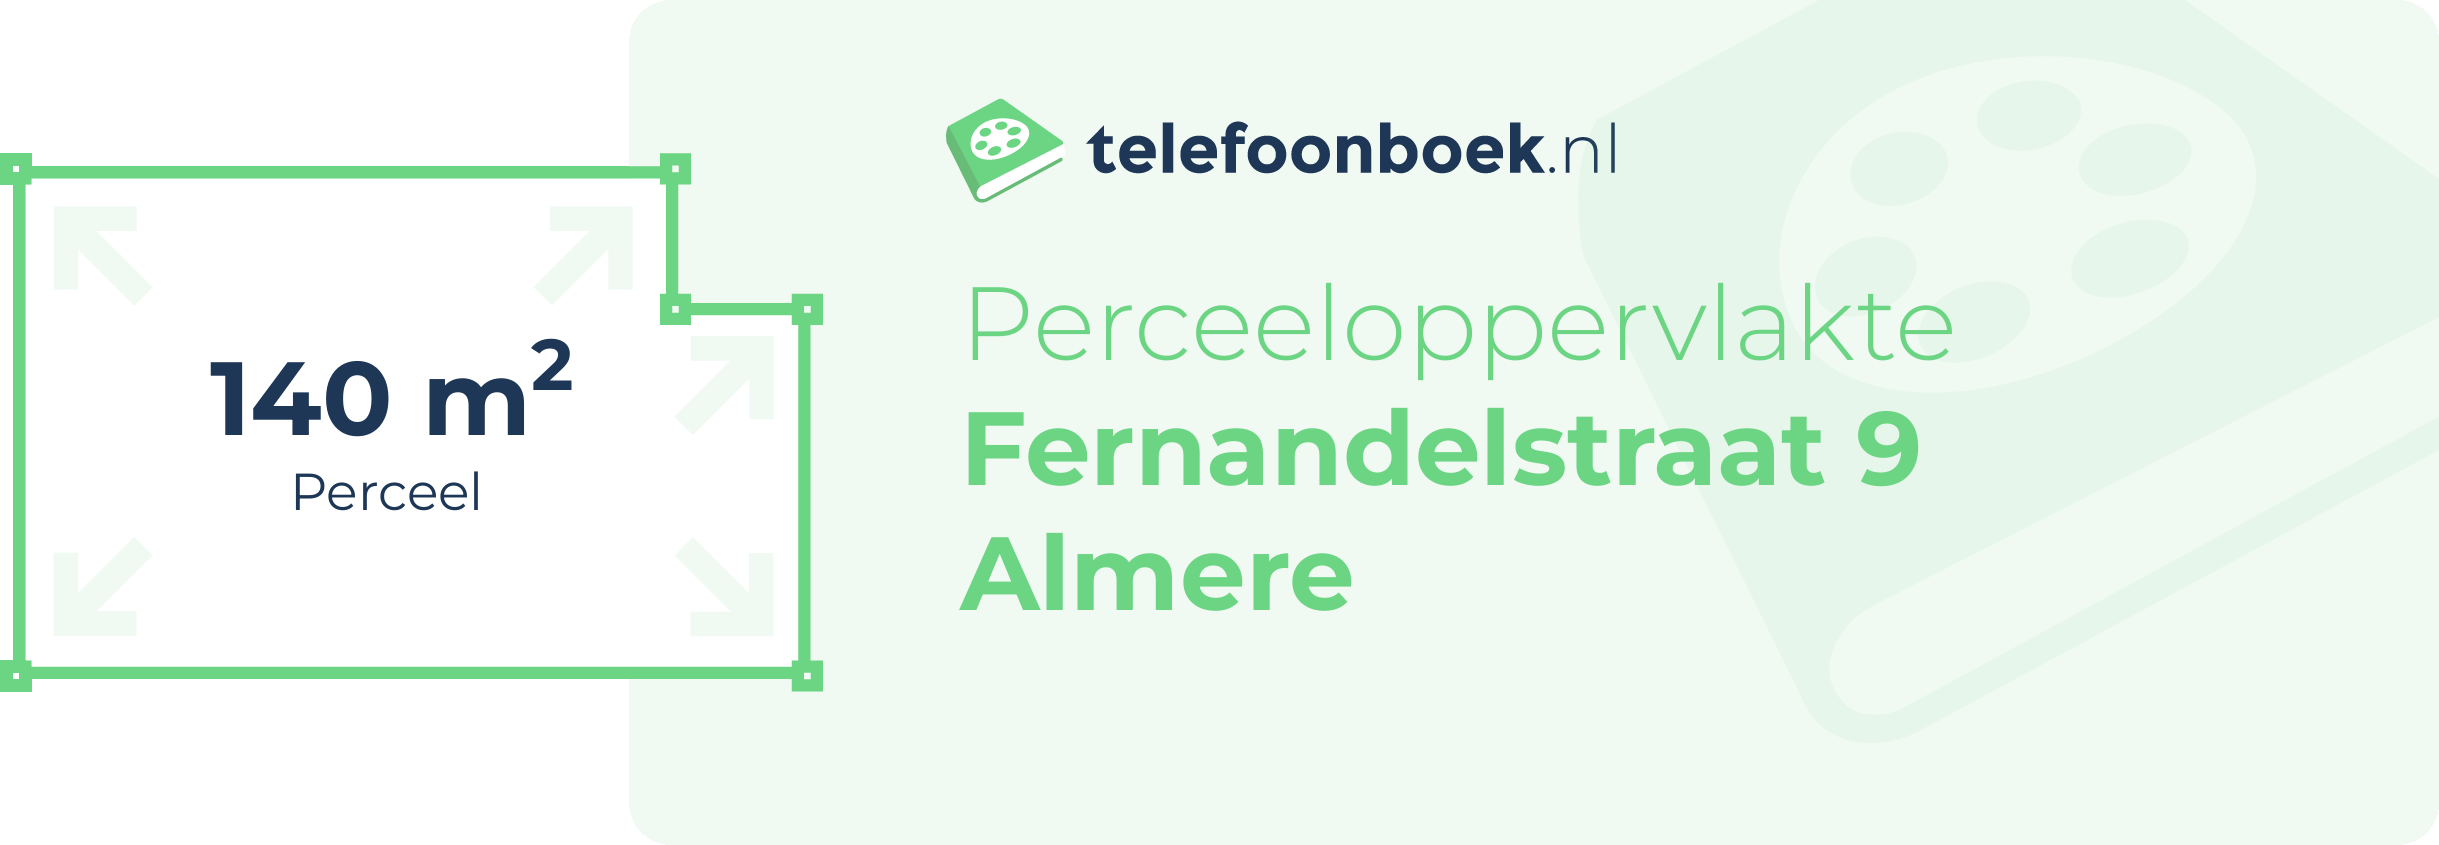 Perceeloppervlakte Fernandelstraat 9 Almere